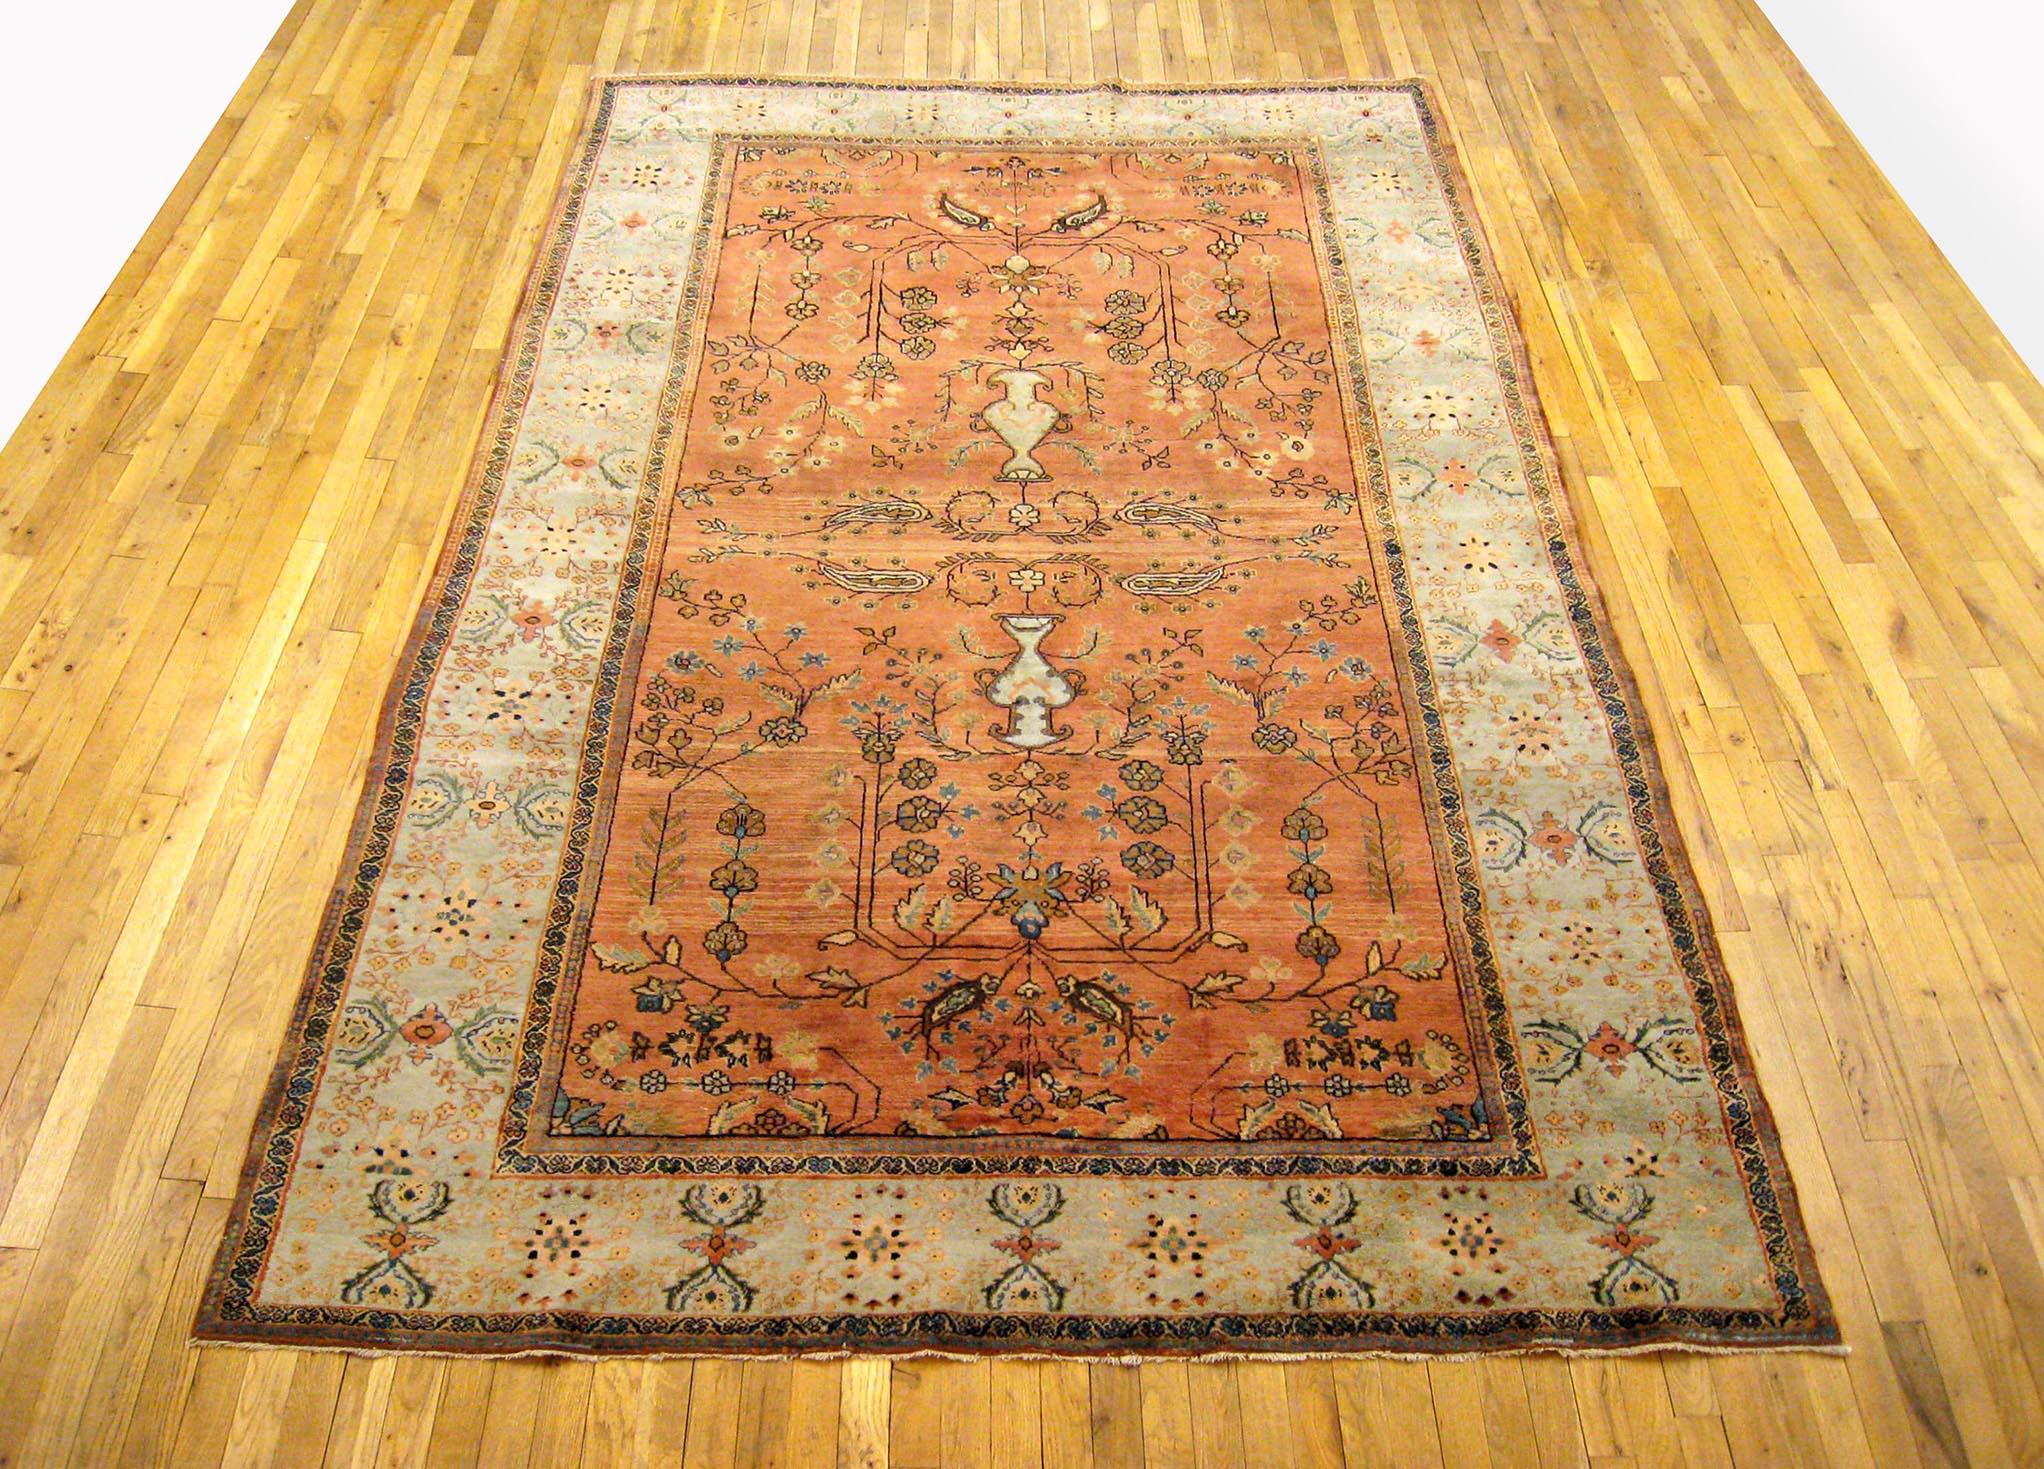 Antique Ferahan Sarouk oriental rug, circa 1900, room size.

An antique Ferahan Sarouk oriental rug, size 10'4